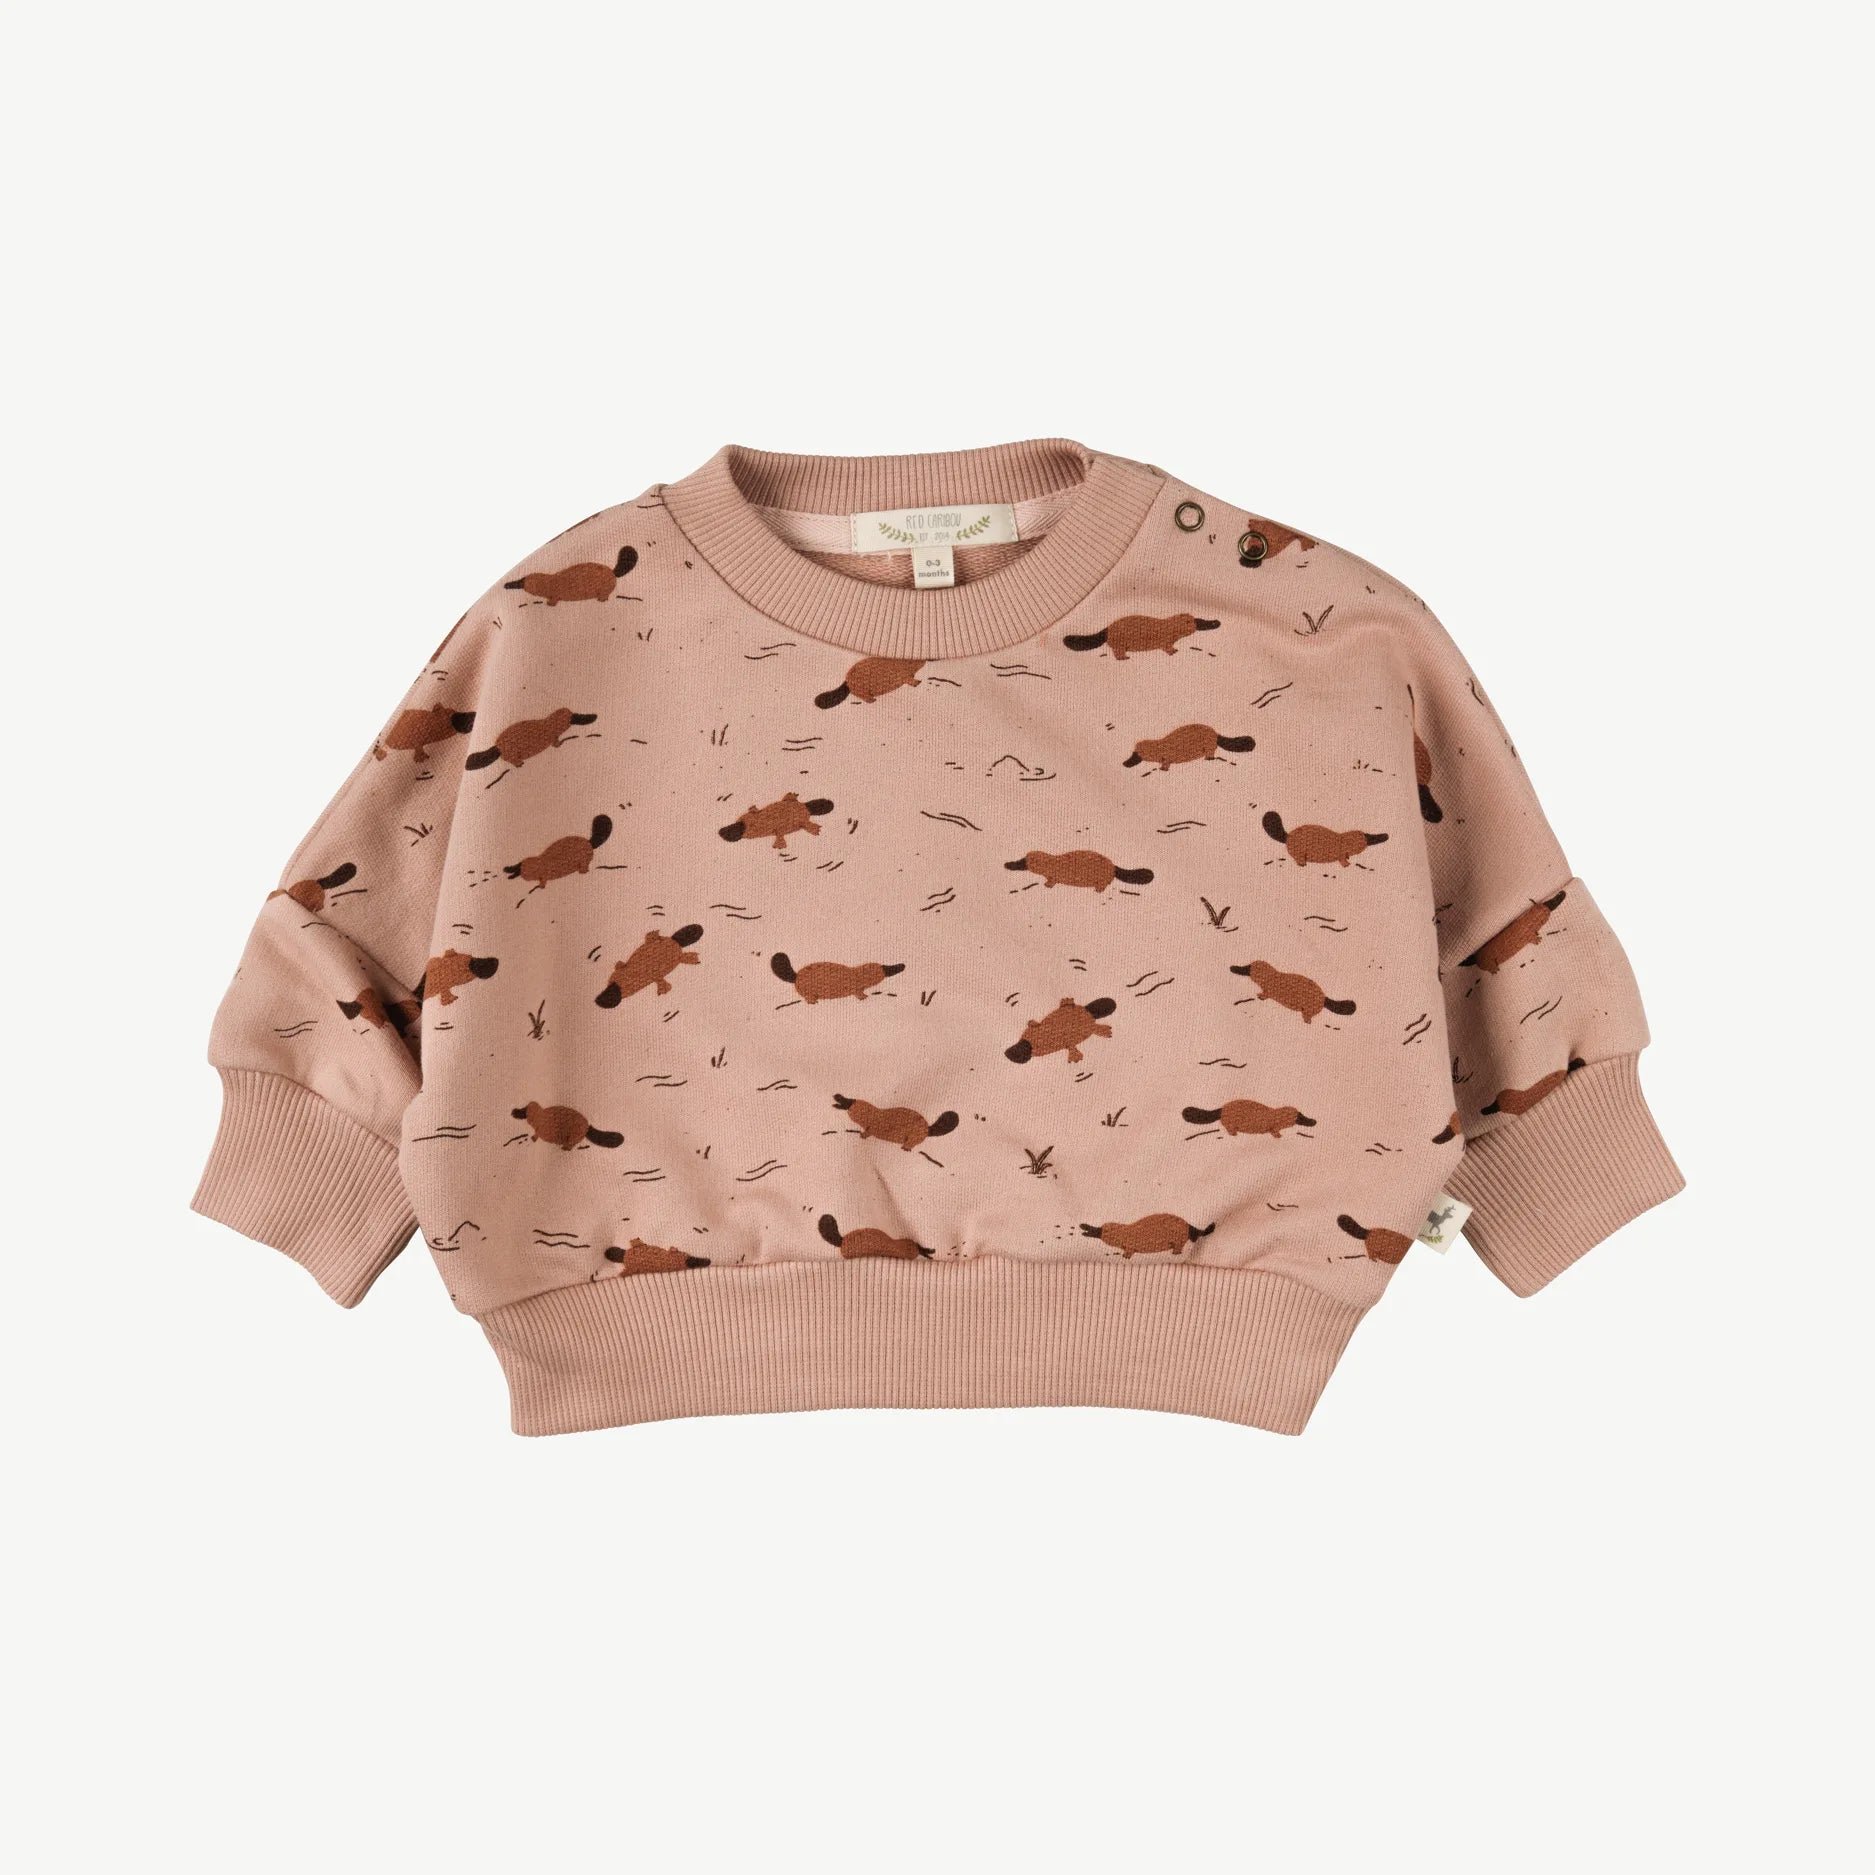 'platypus pond' mahogany rose sweatshirt